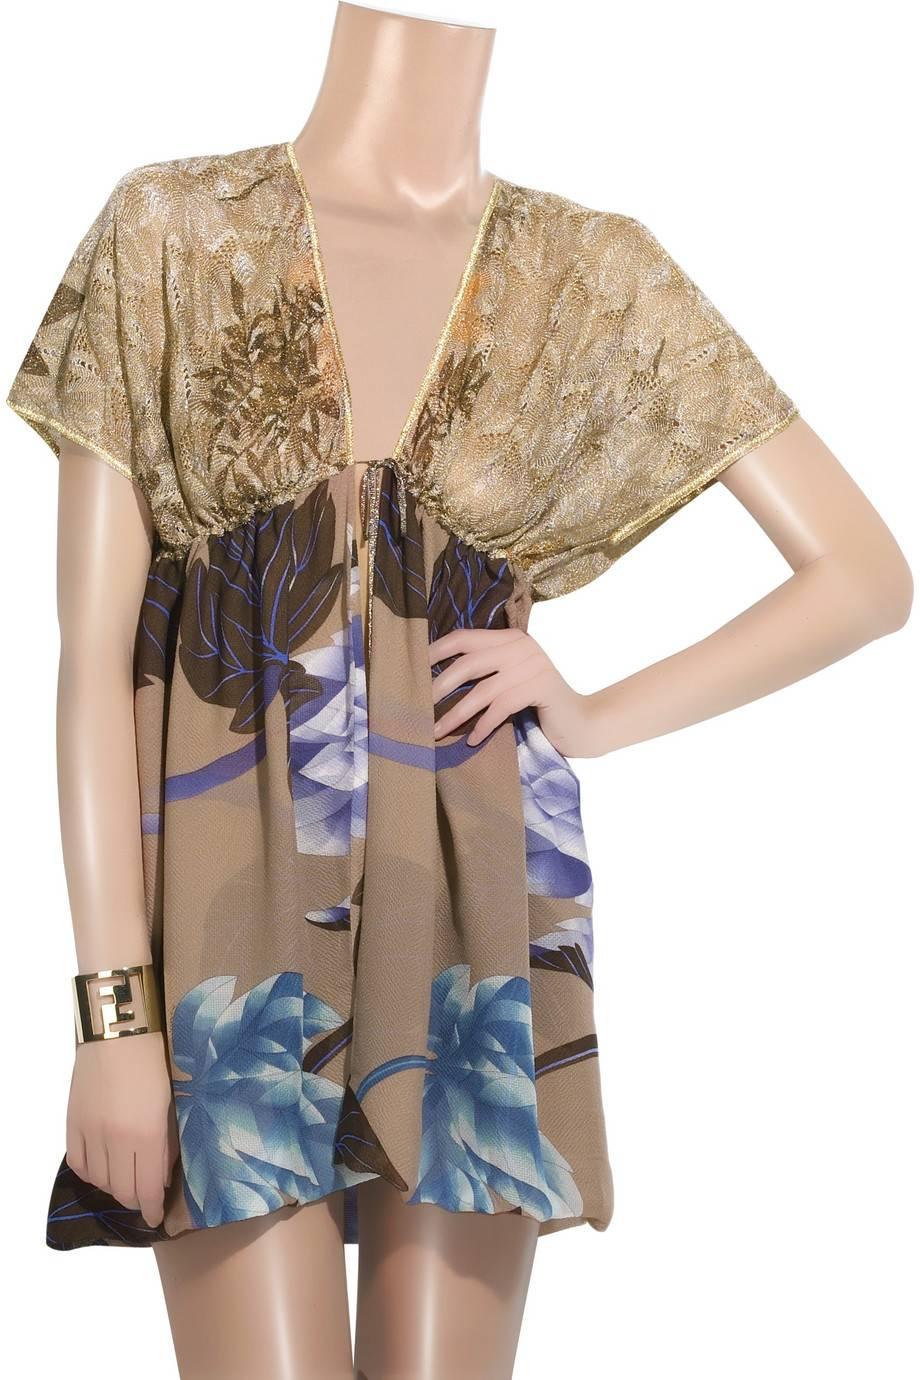 NEU Missoni Gold Metallic Crochet Knit Floral Kaftan Tunika Kleid Cover Up 40 im Angebot 4